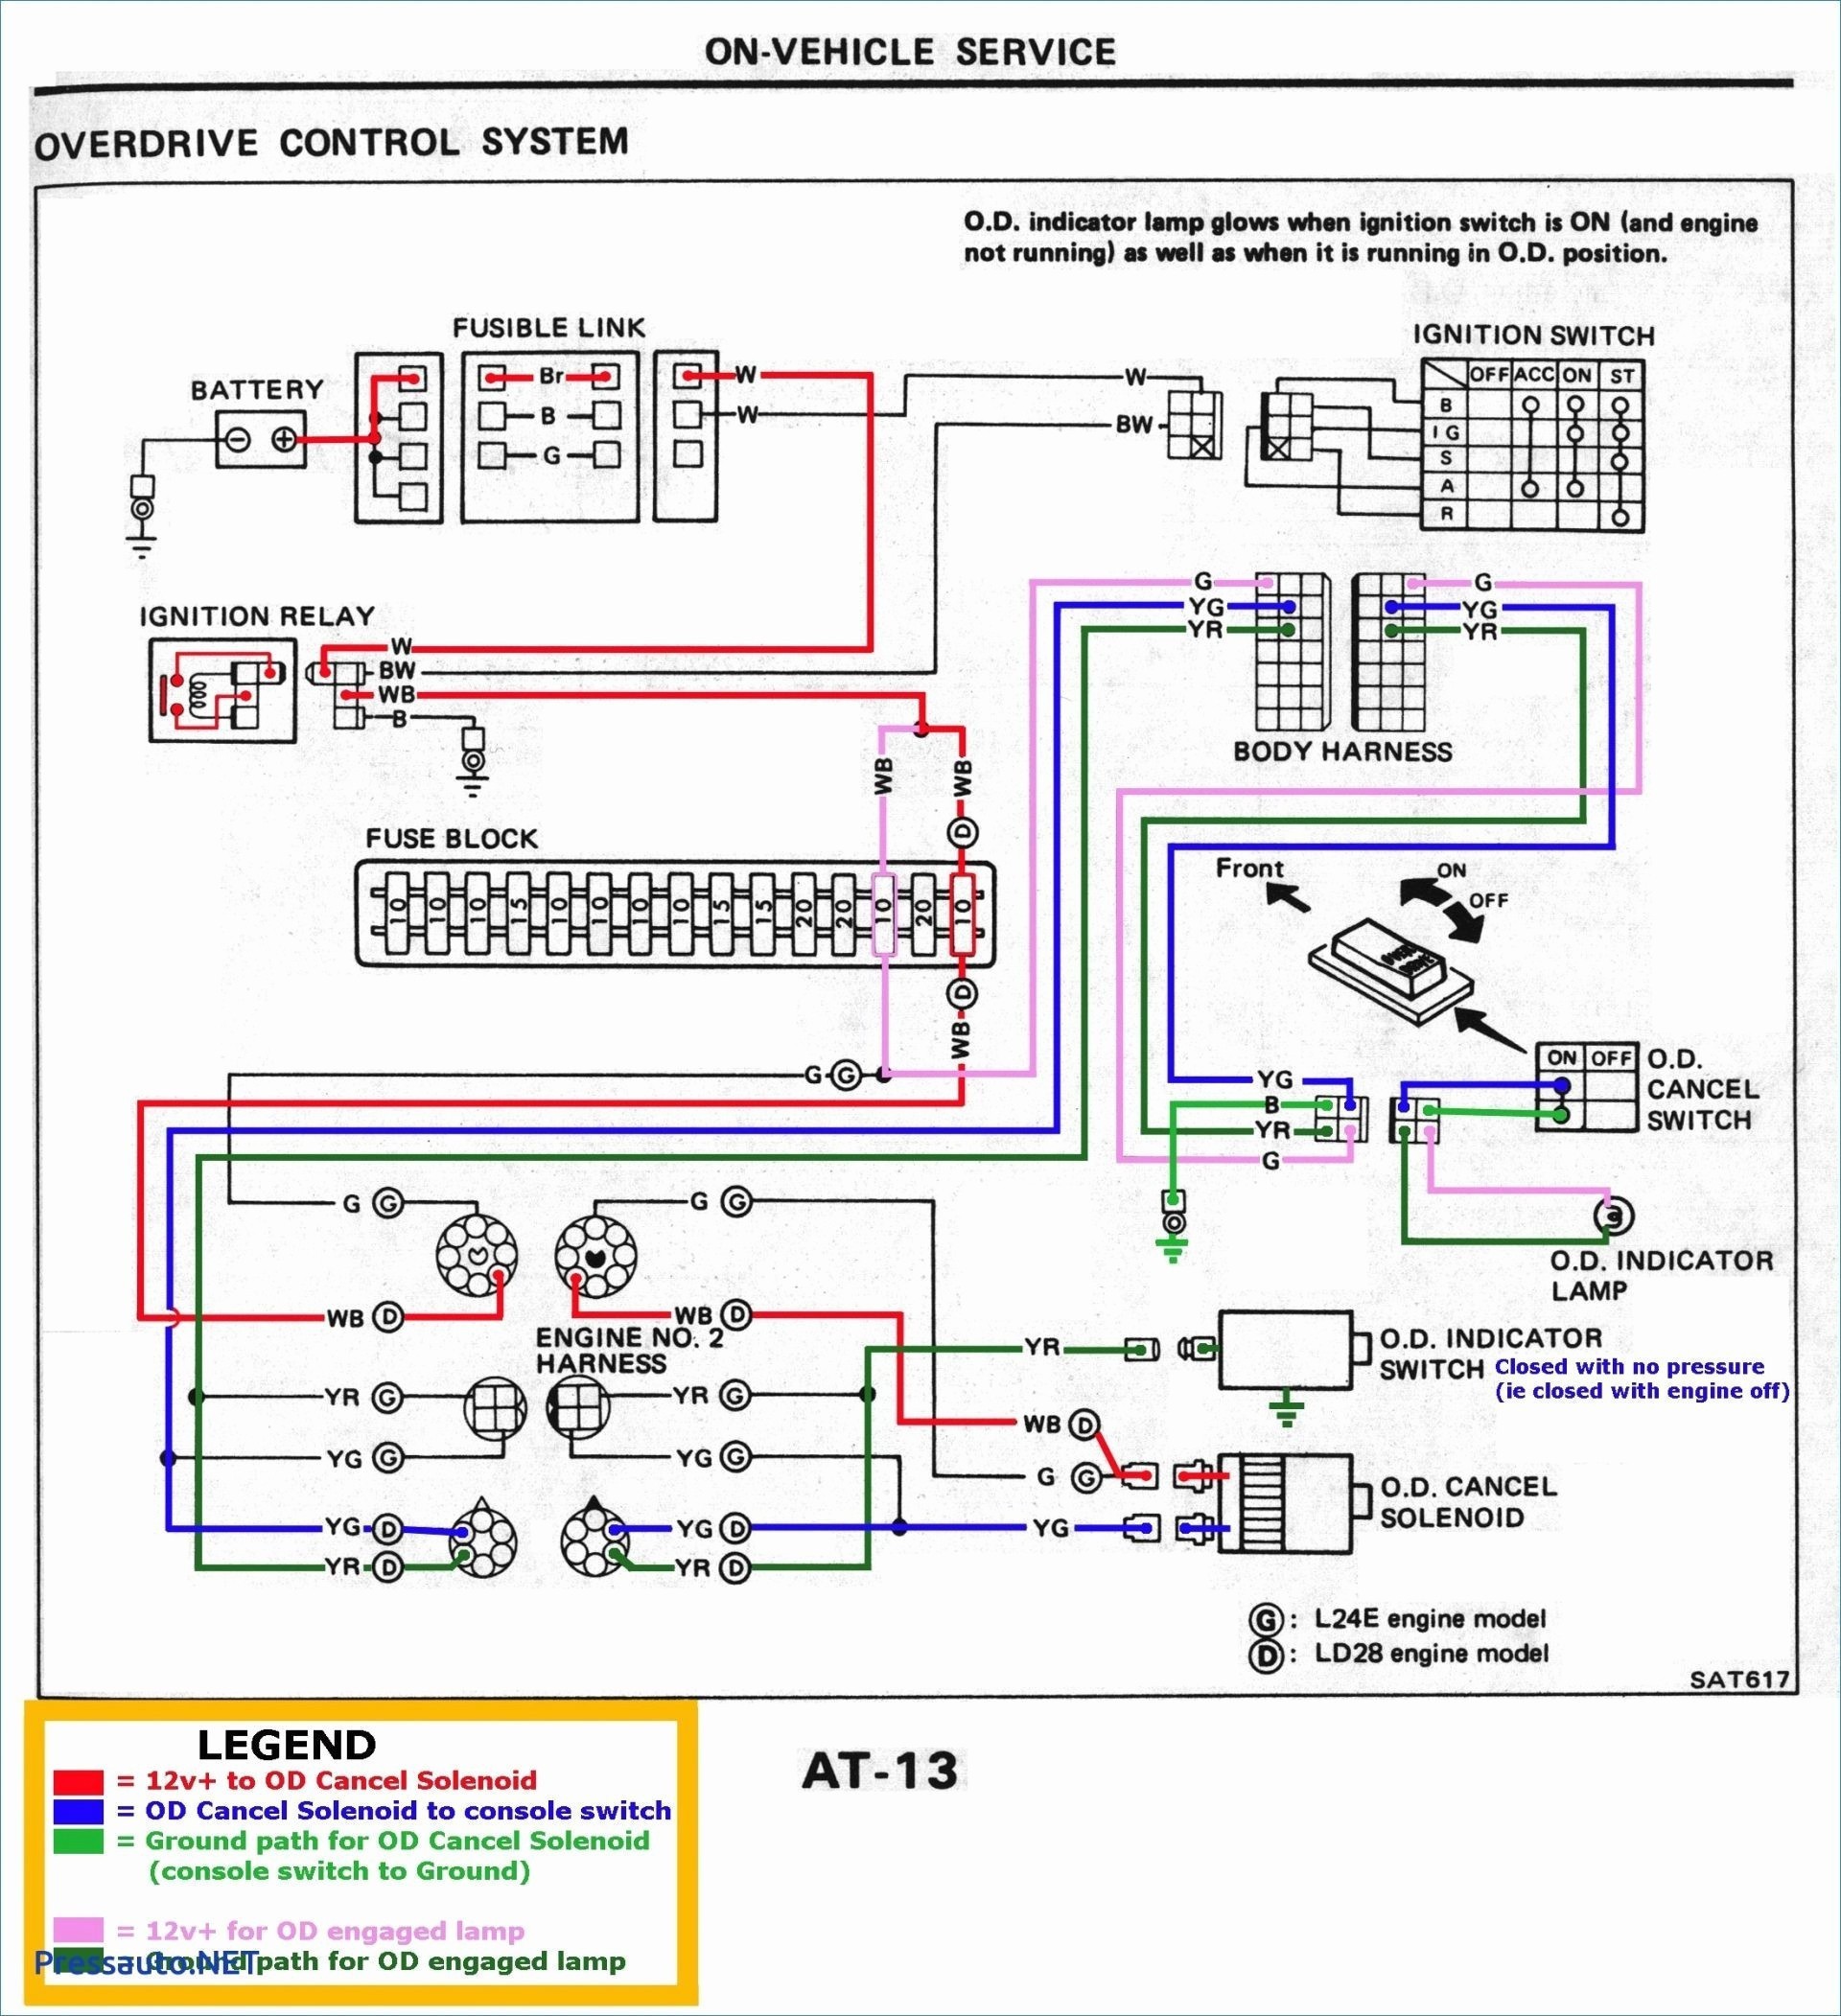 Single Phase Transformer Wiring Diagram 208v Single Phase Motor Wiring Diagram Of Single Phase Transformer Wiring Diagram